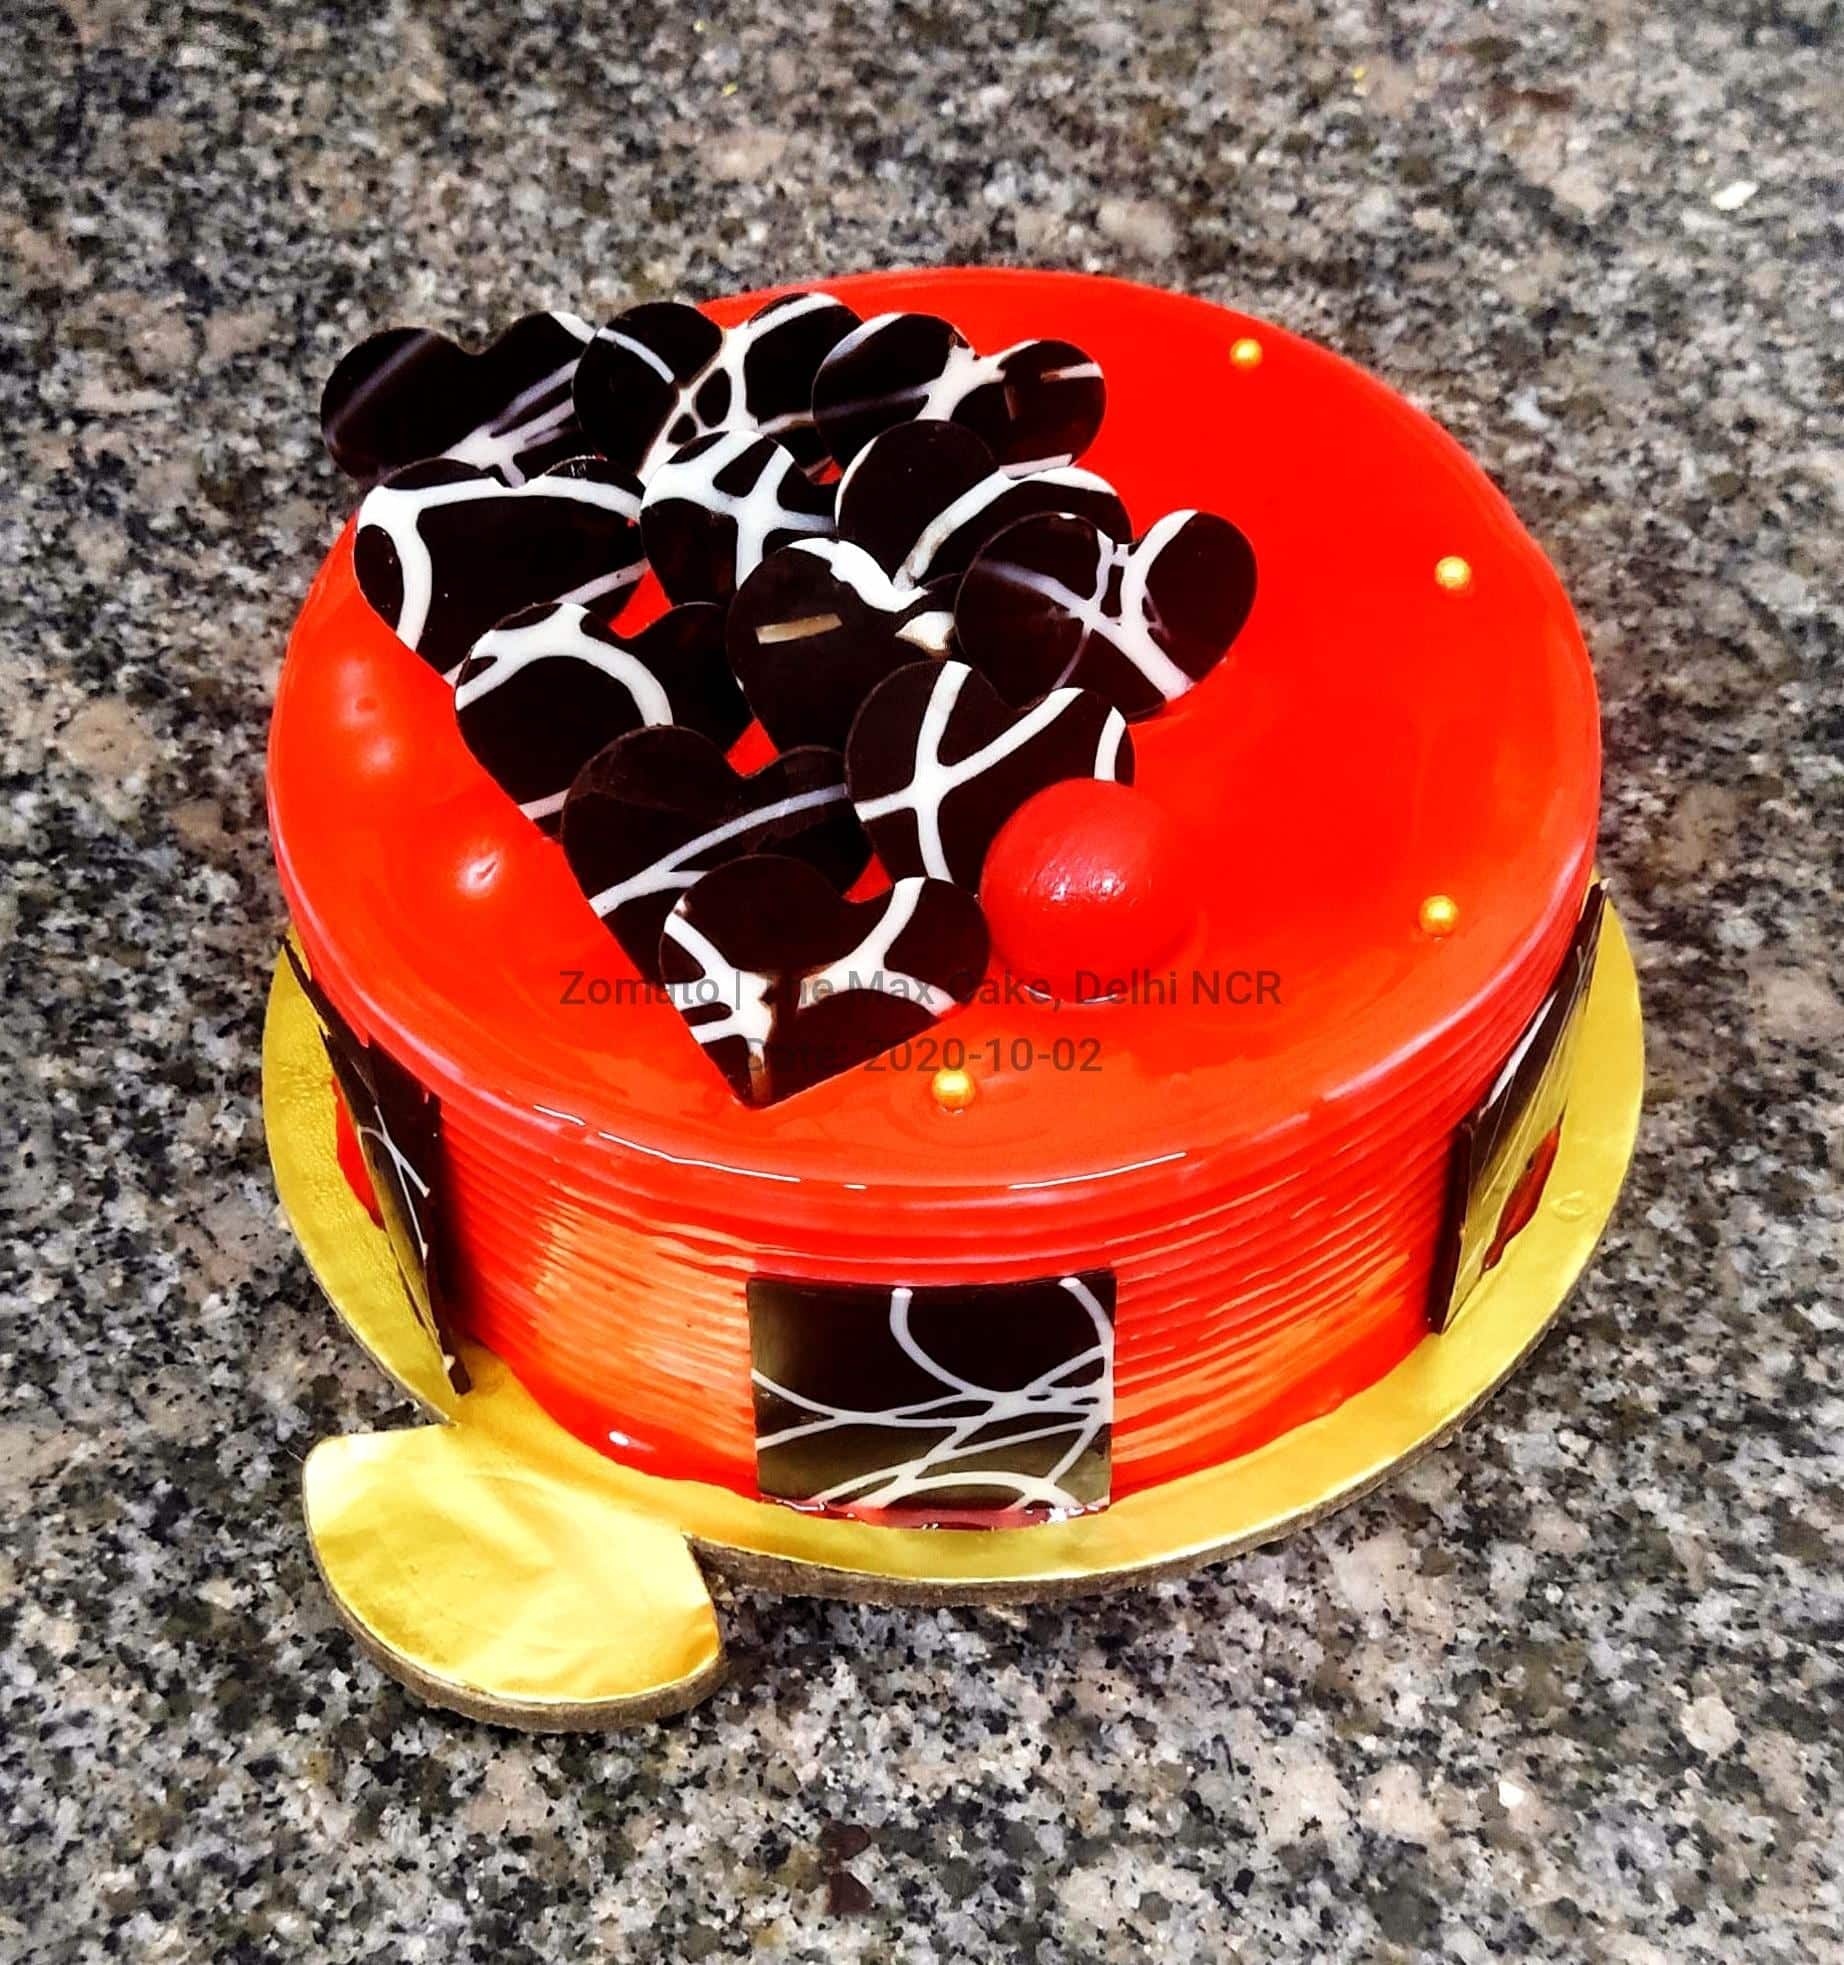 Swiggy Wishes Zomato 'Happy Birthday', Sends 15th Anniversary Cake | Viral  News, Times Now